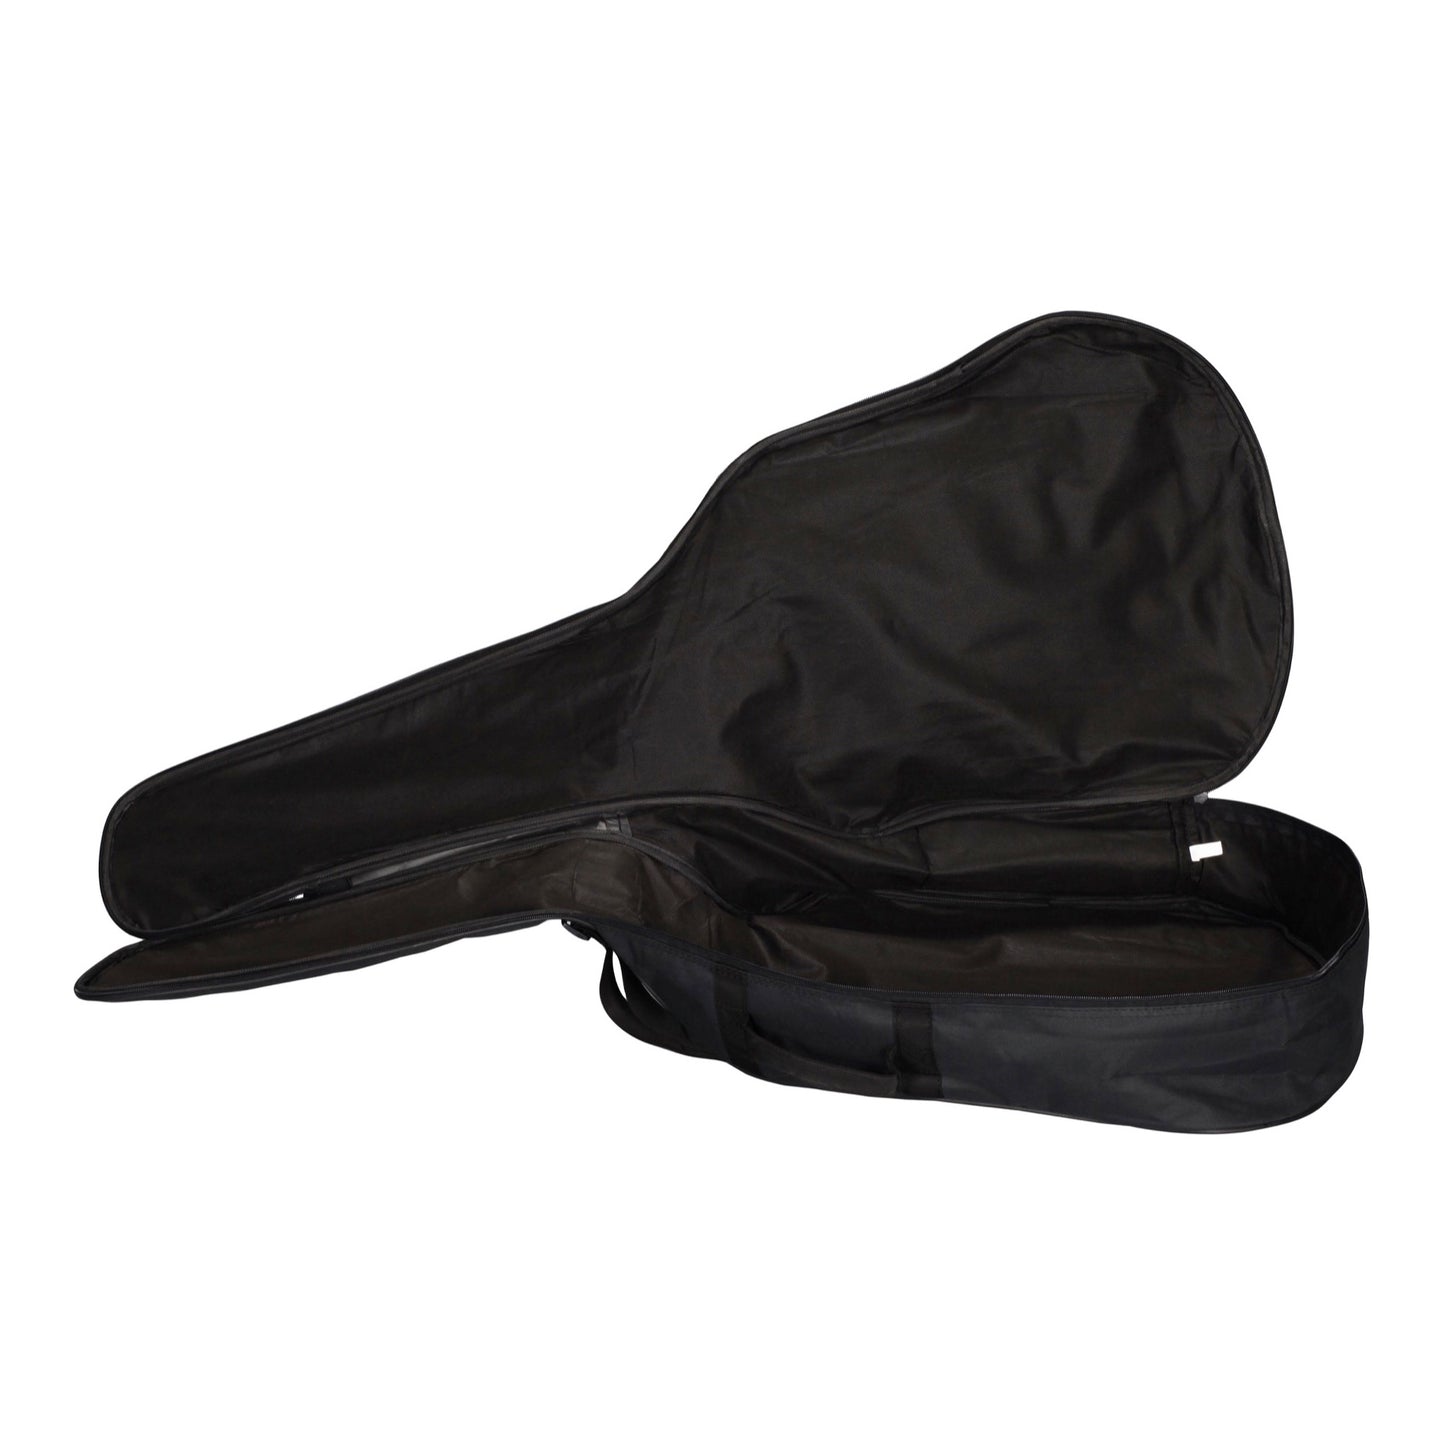 Standard Series Dreadnought Acoustic Guitar Gig Bag